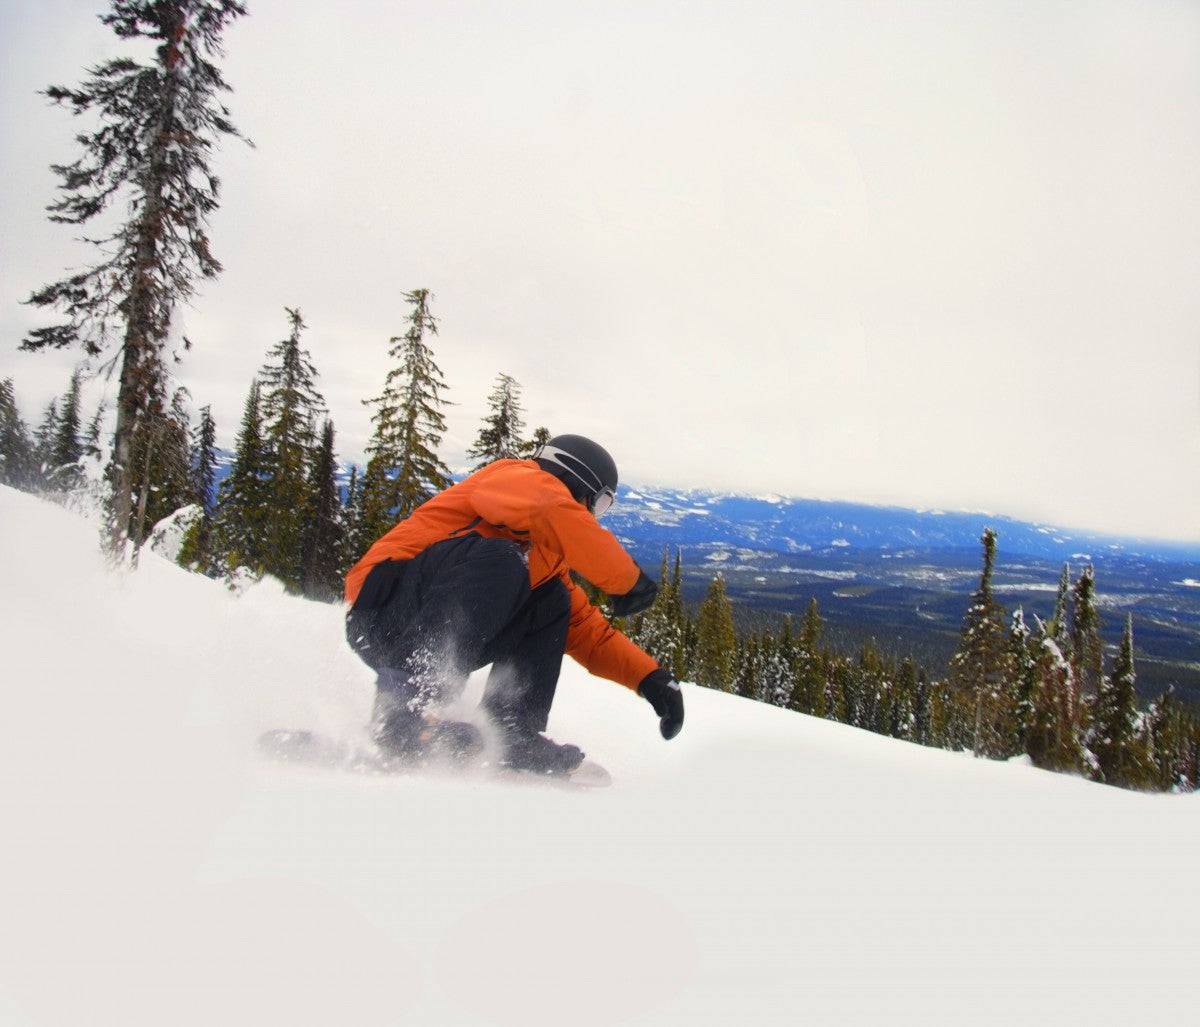 Snowboarder Crouching Down Low - Powderaddicts